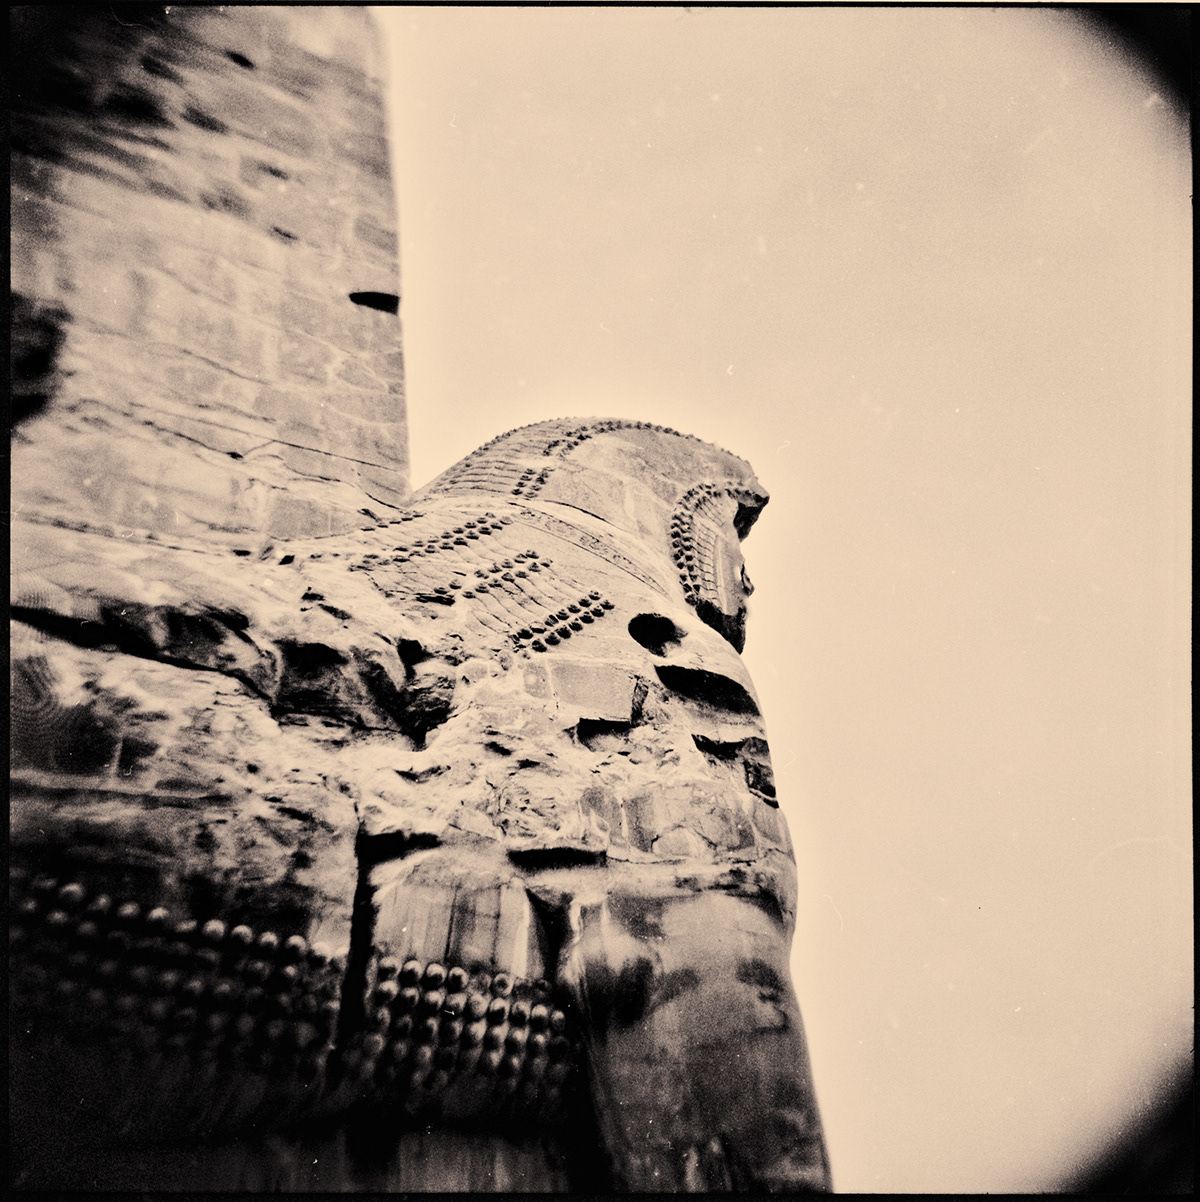 Iran Persepolis monochrome